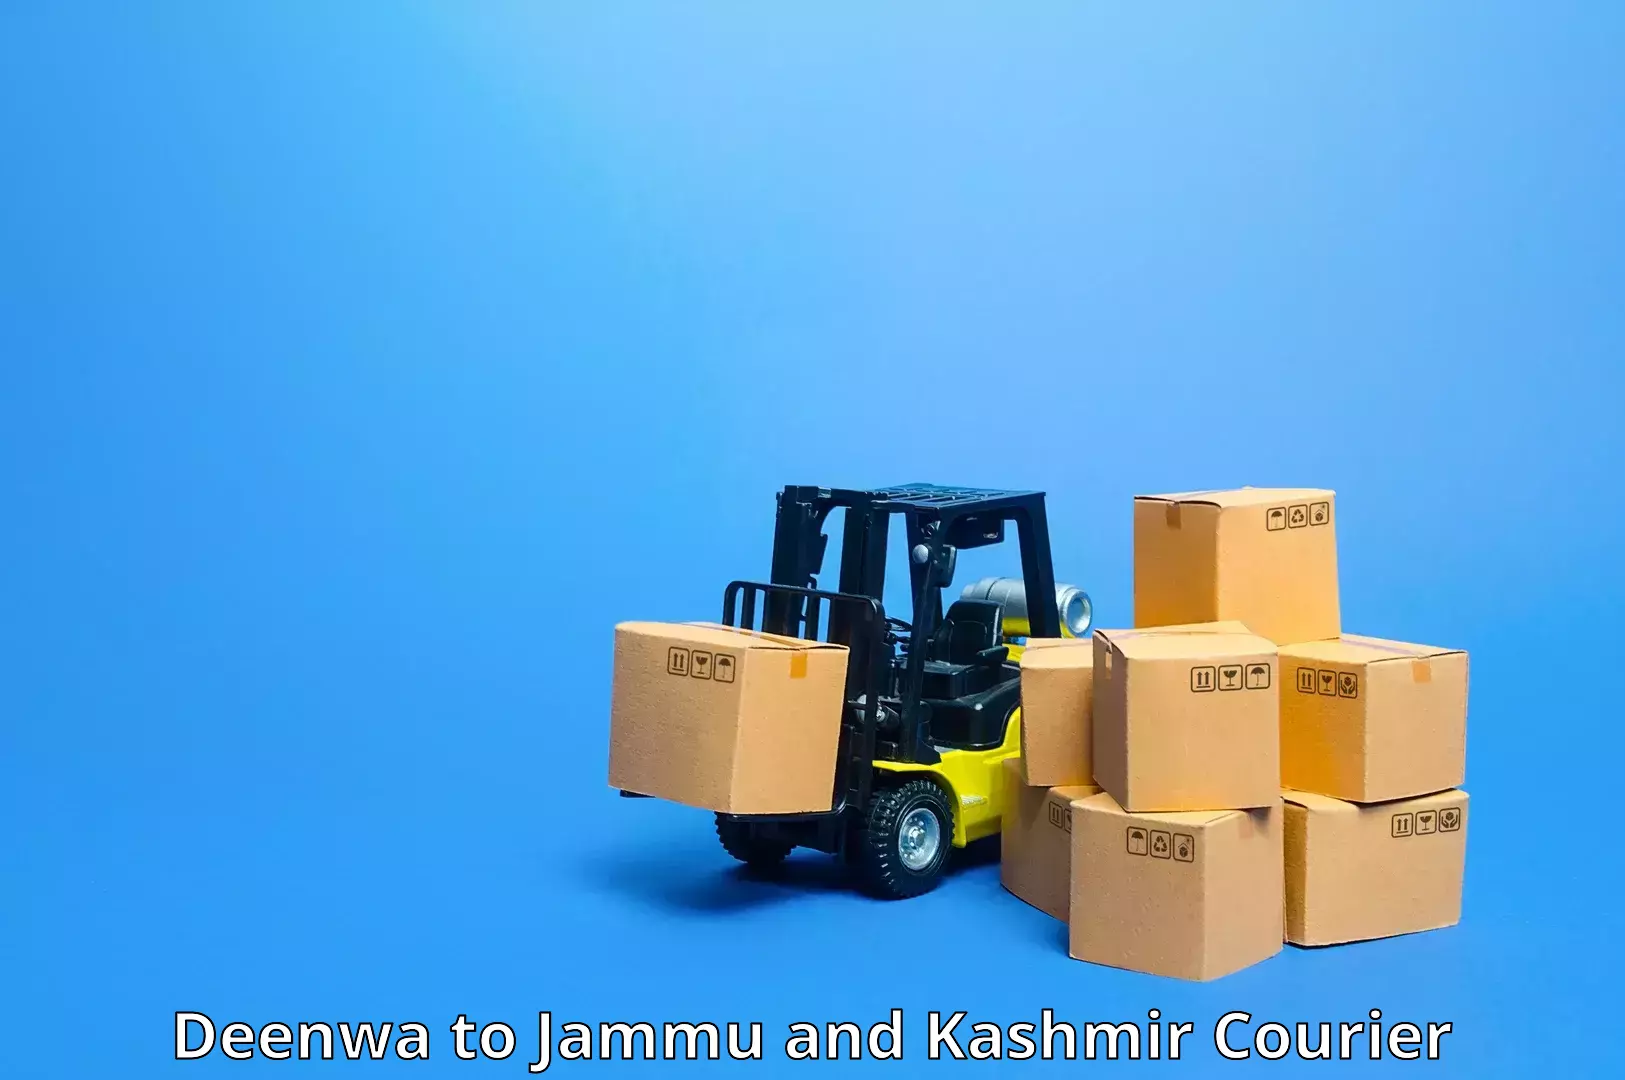 24/7 courier service Deenwa to Anantnag